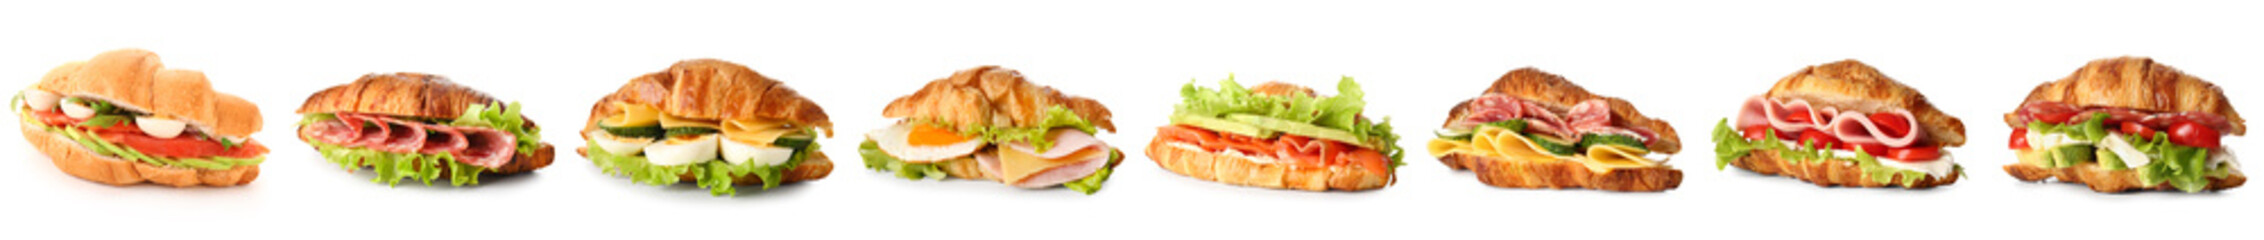 Set of tasty croissant sandwiches on white background